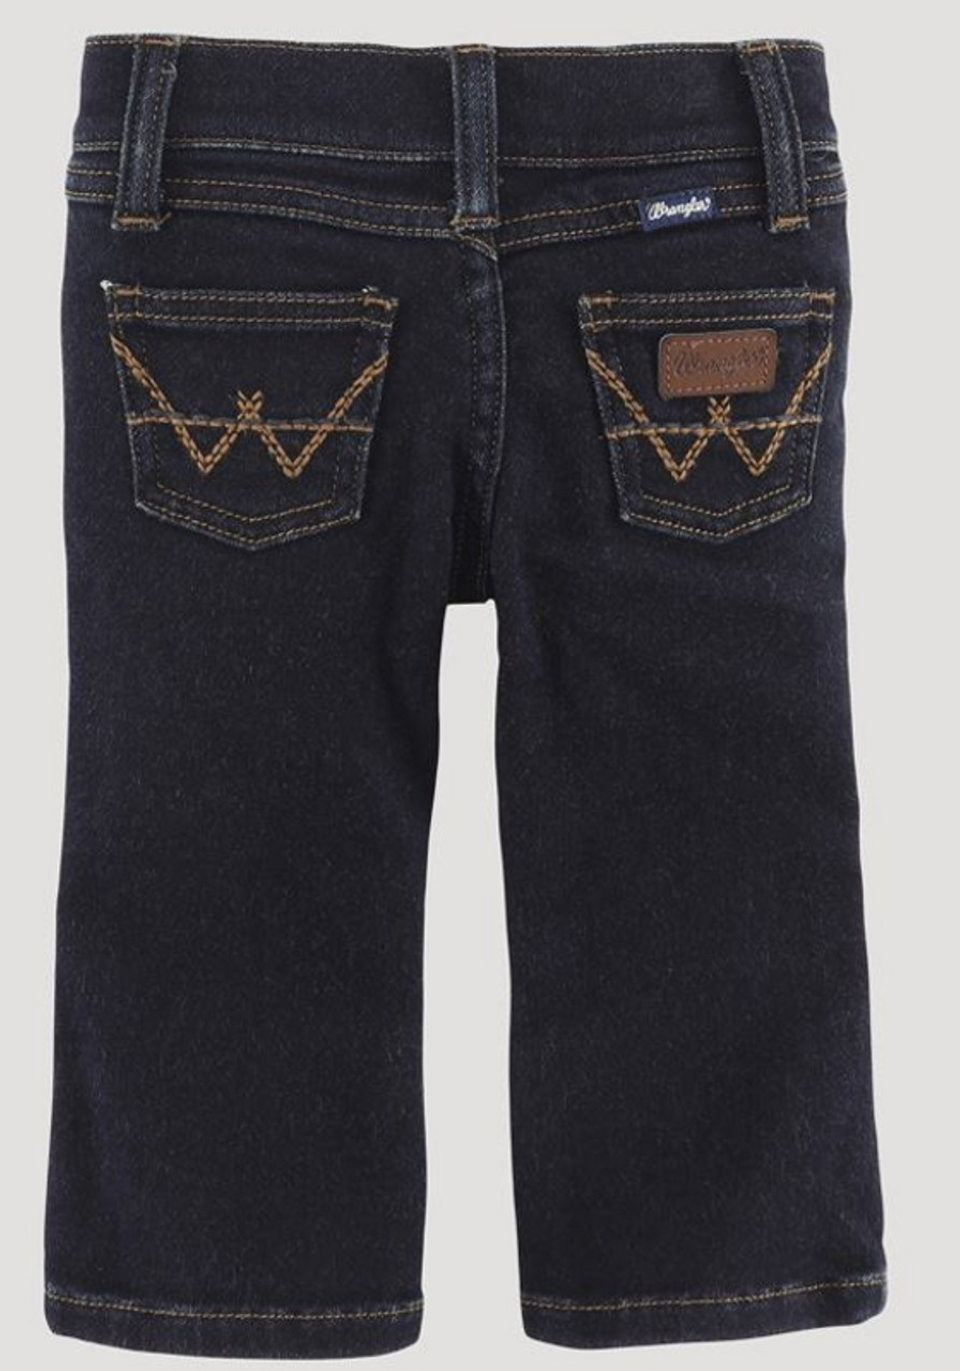 Wrangler Baby/Toddler Boy's Dark Wash Jeans